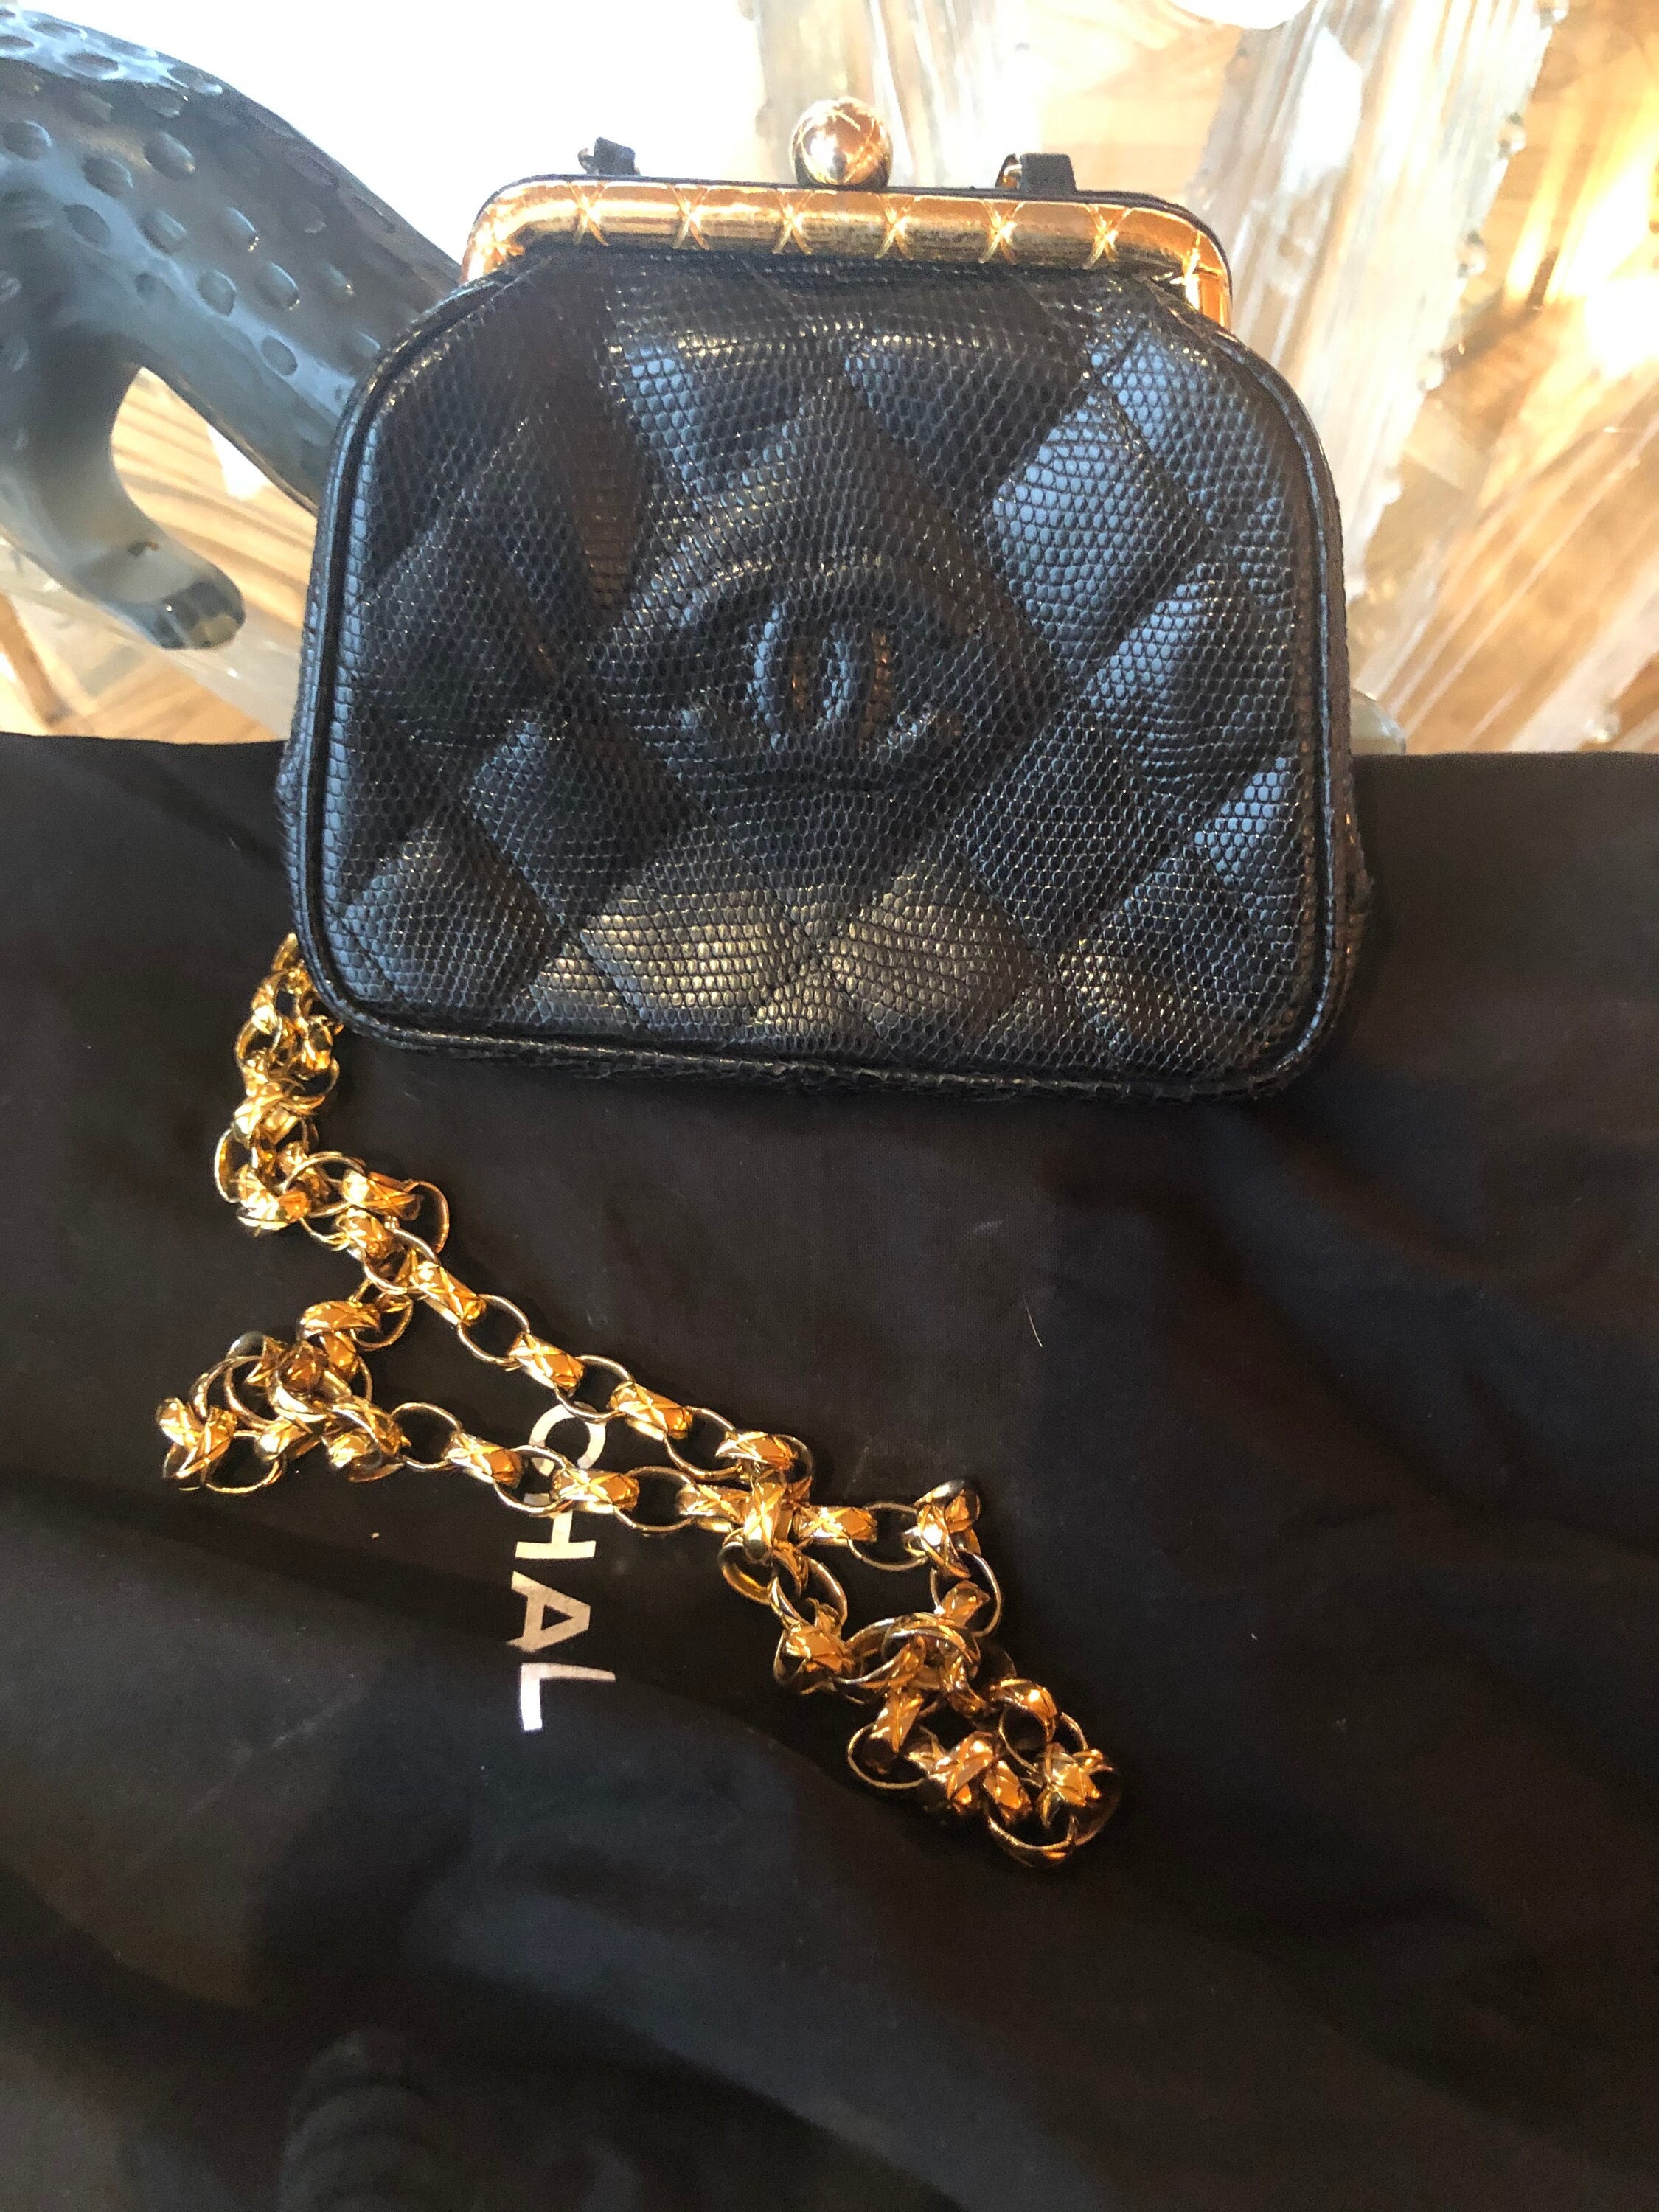 Sold at Auction: Rare Vintage Chanel Black Lizard Mini Flap Bag